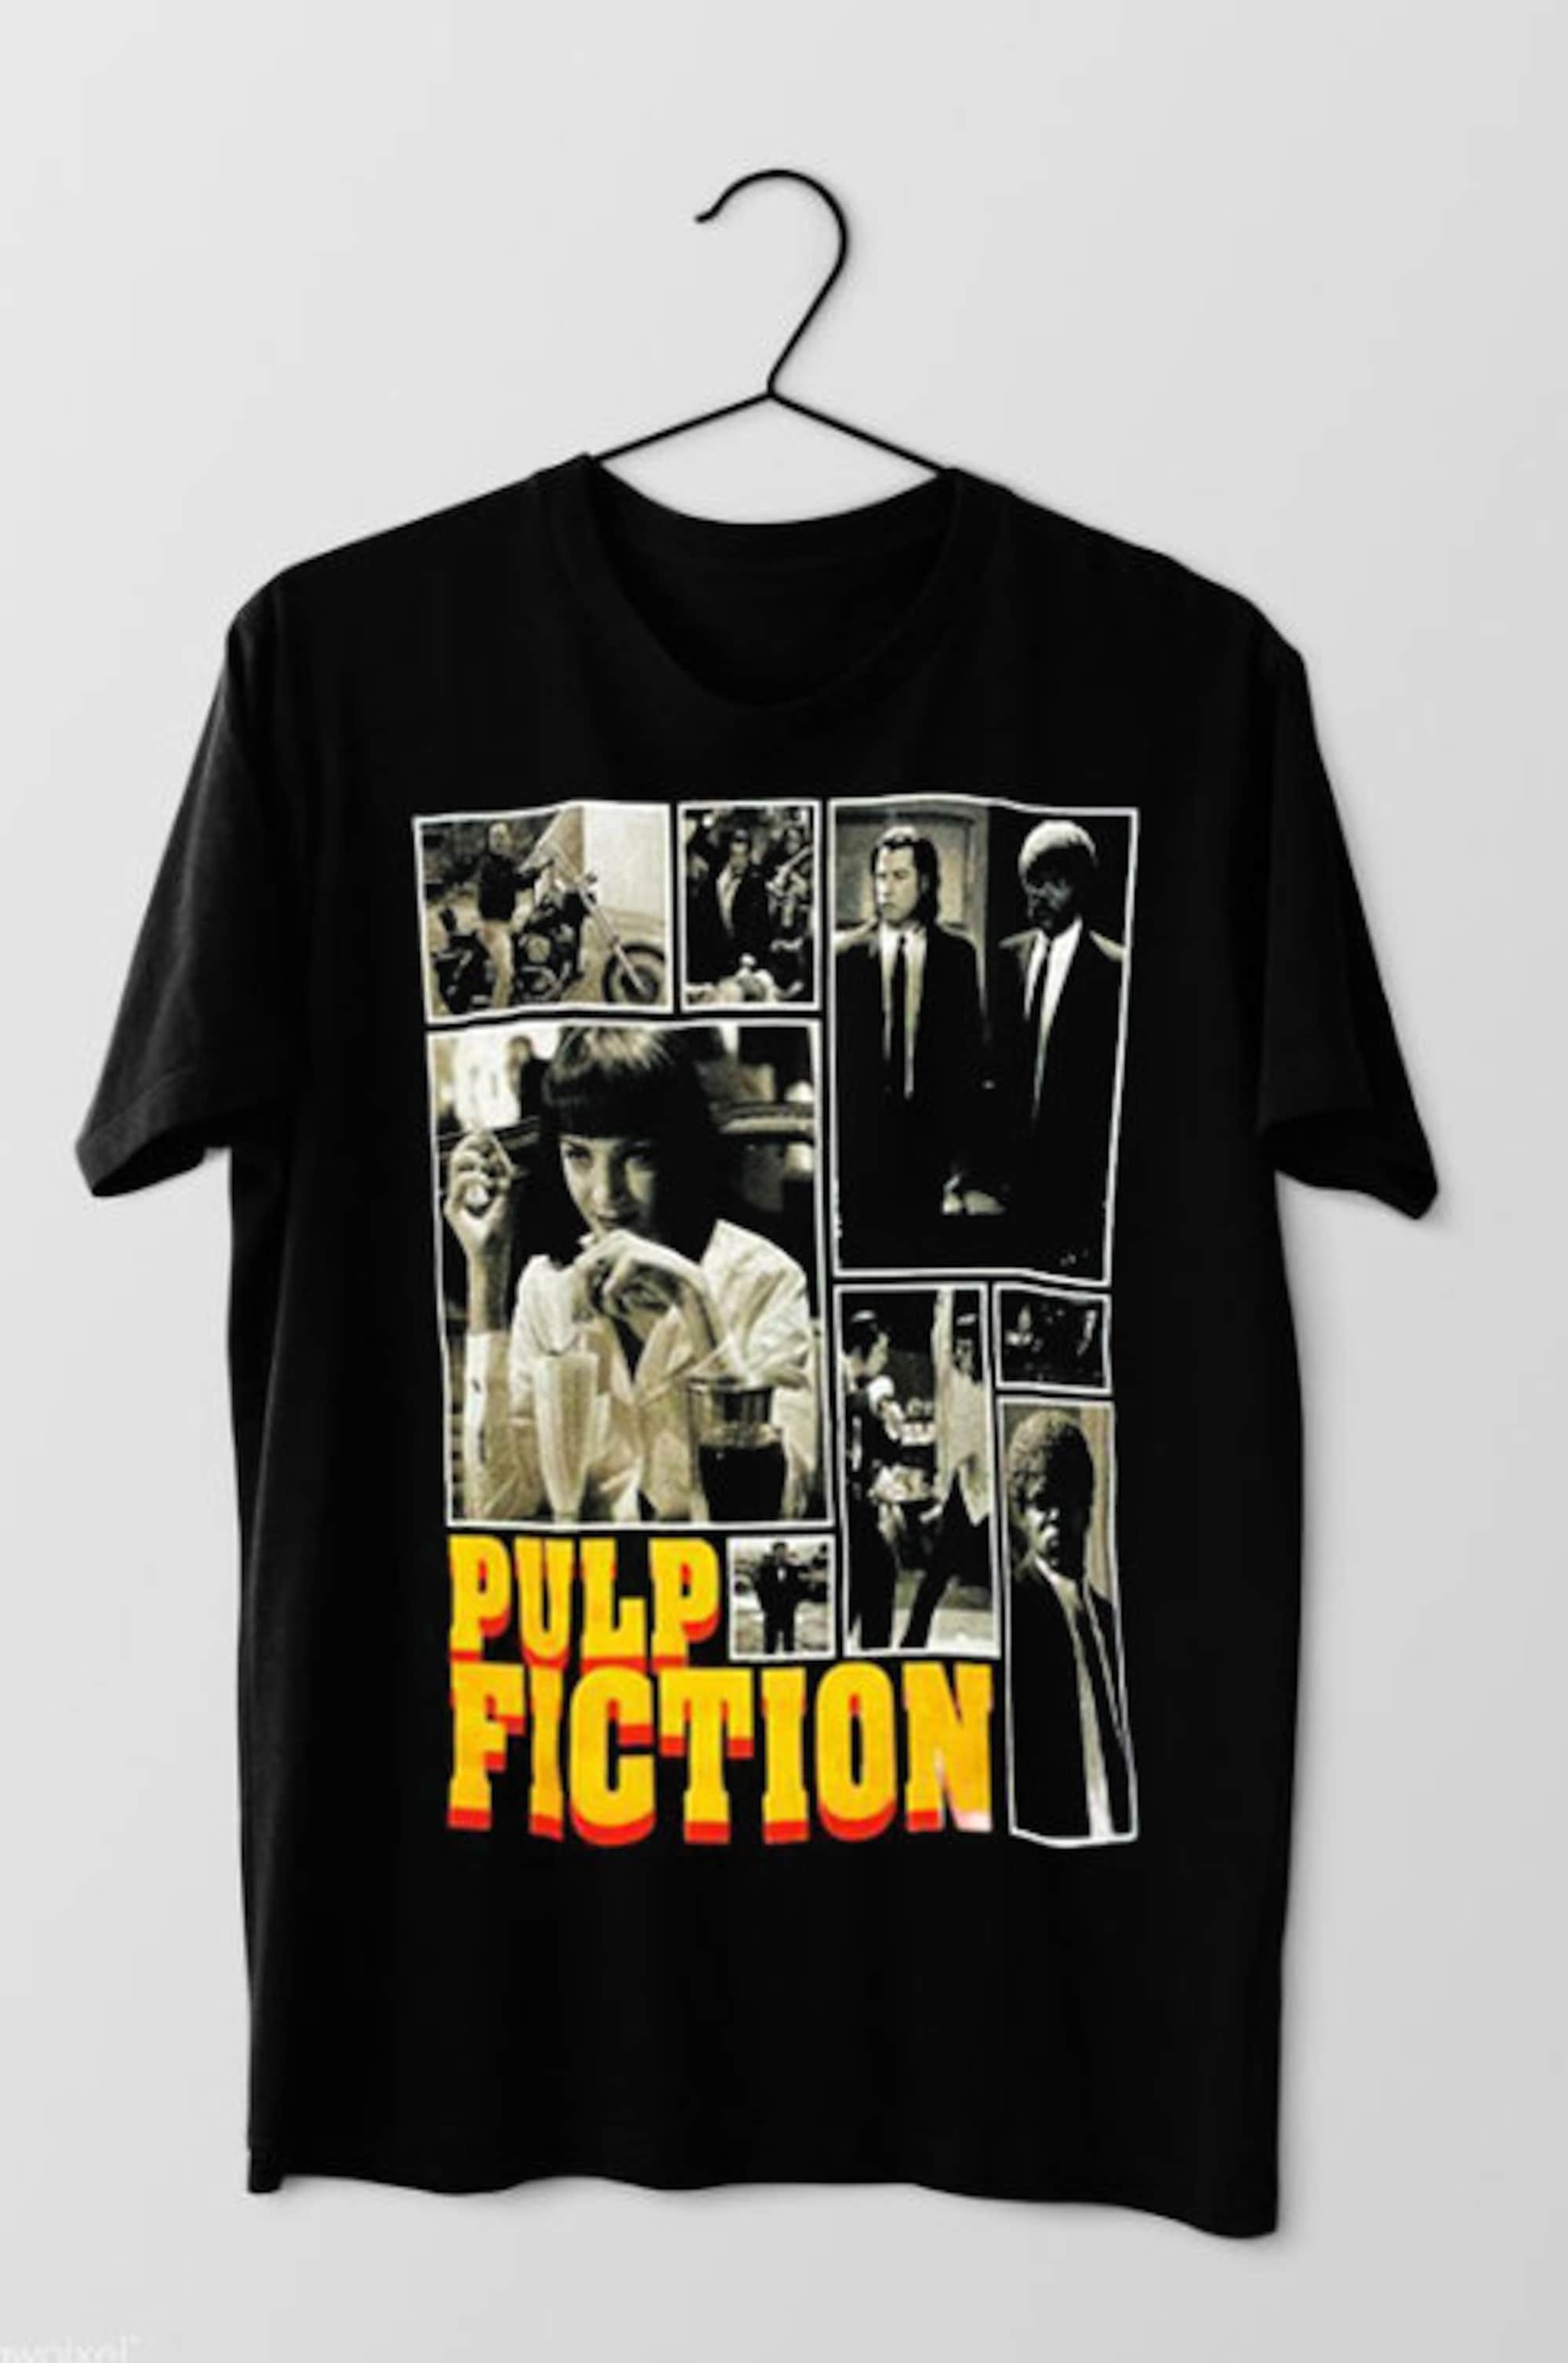 Pulp Fiction T-Shirt, Vtg Pulp Fiction T-Shirt, Vintage Pulp Fiction Movie T-Shirt, 1994 Black Comedy Crime Film T-Shirt